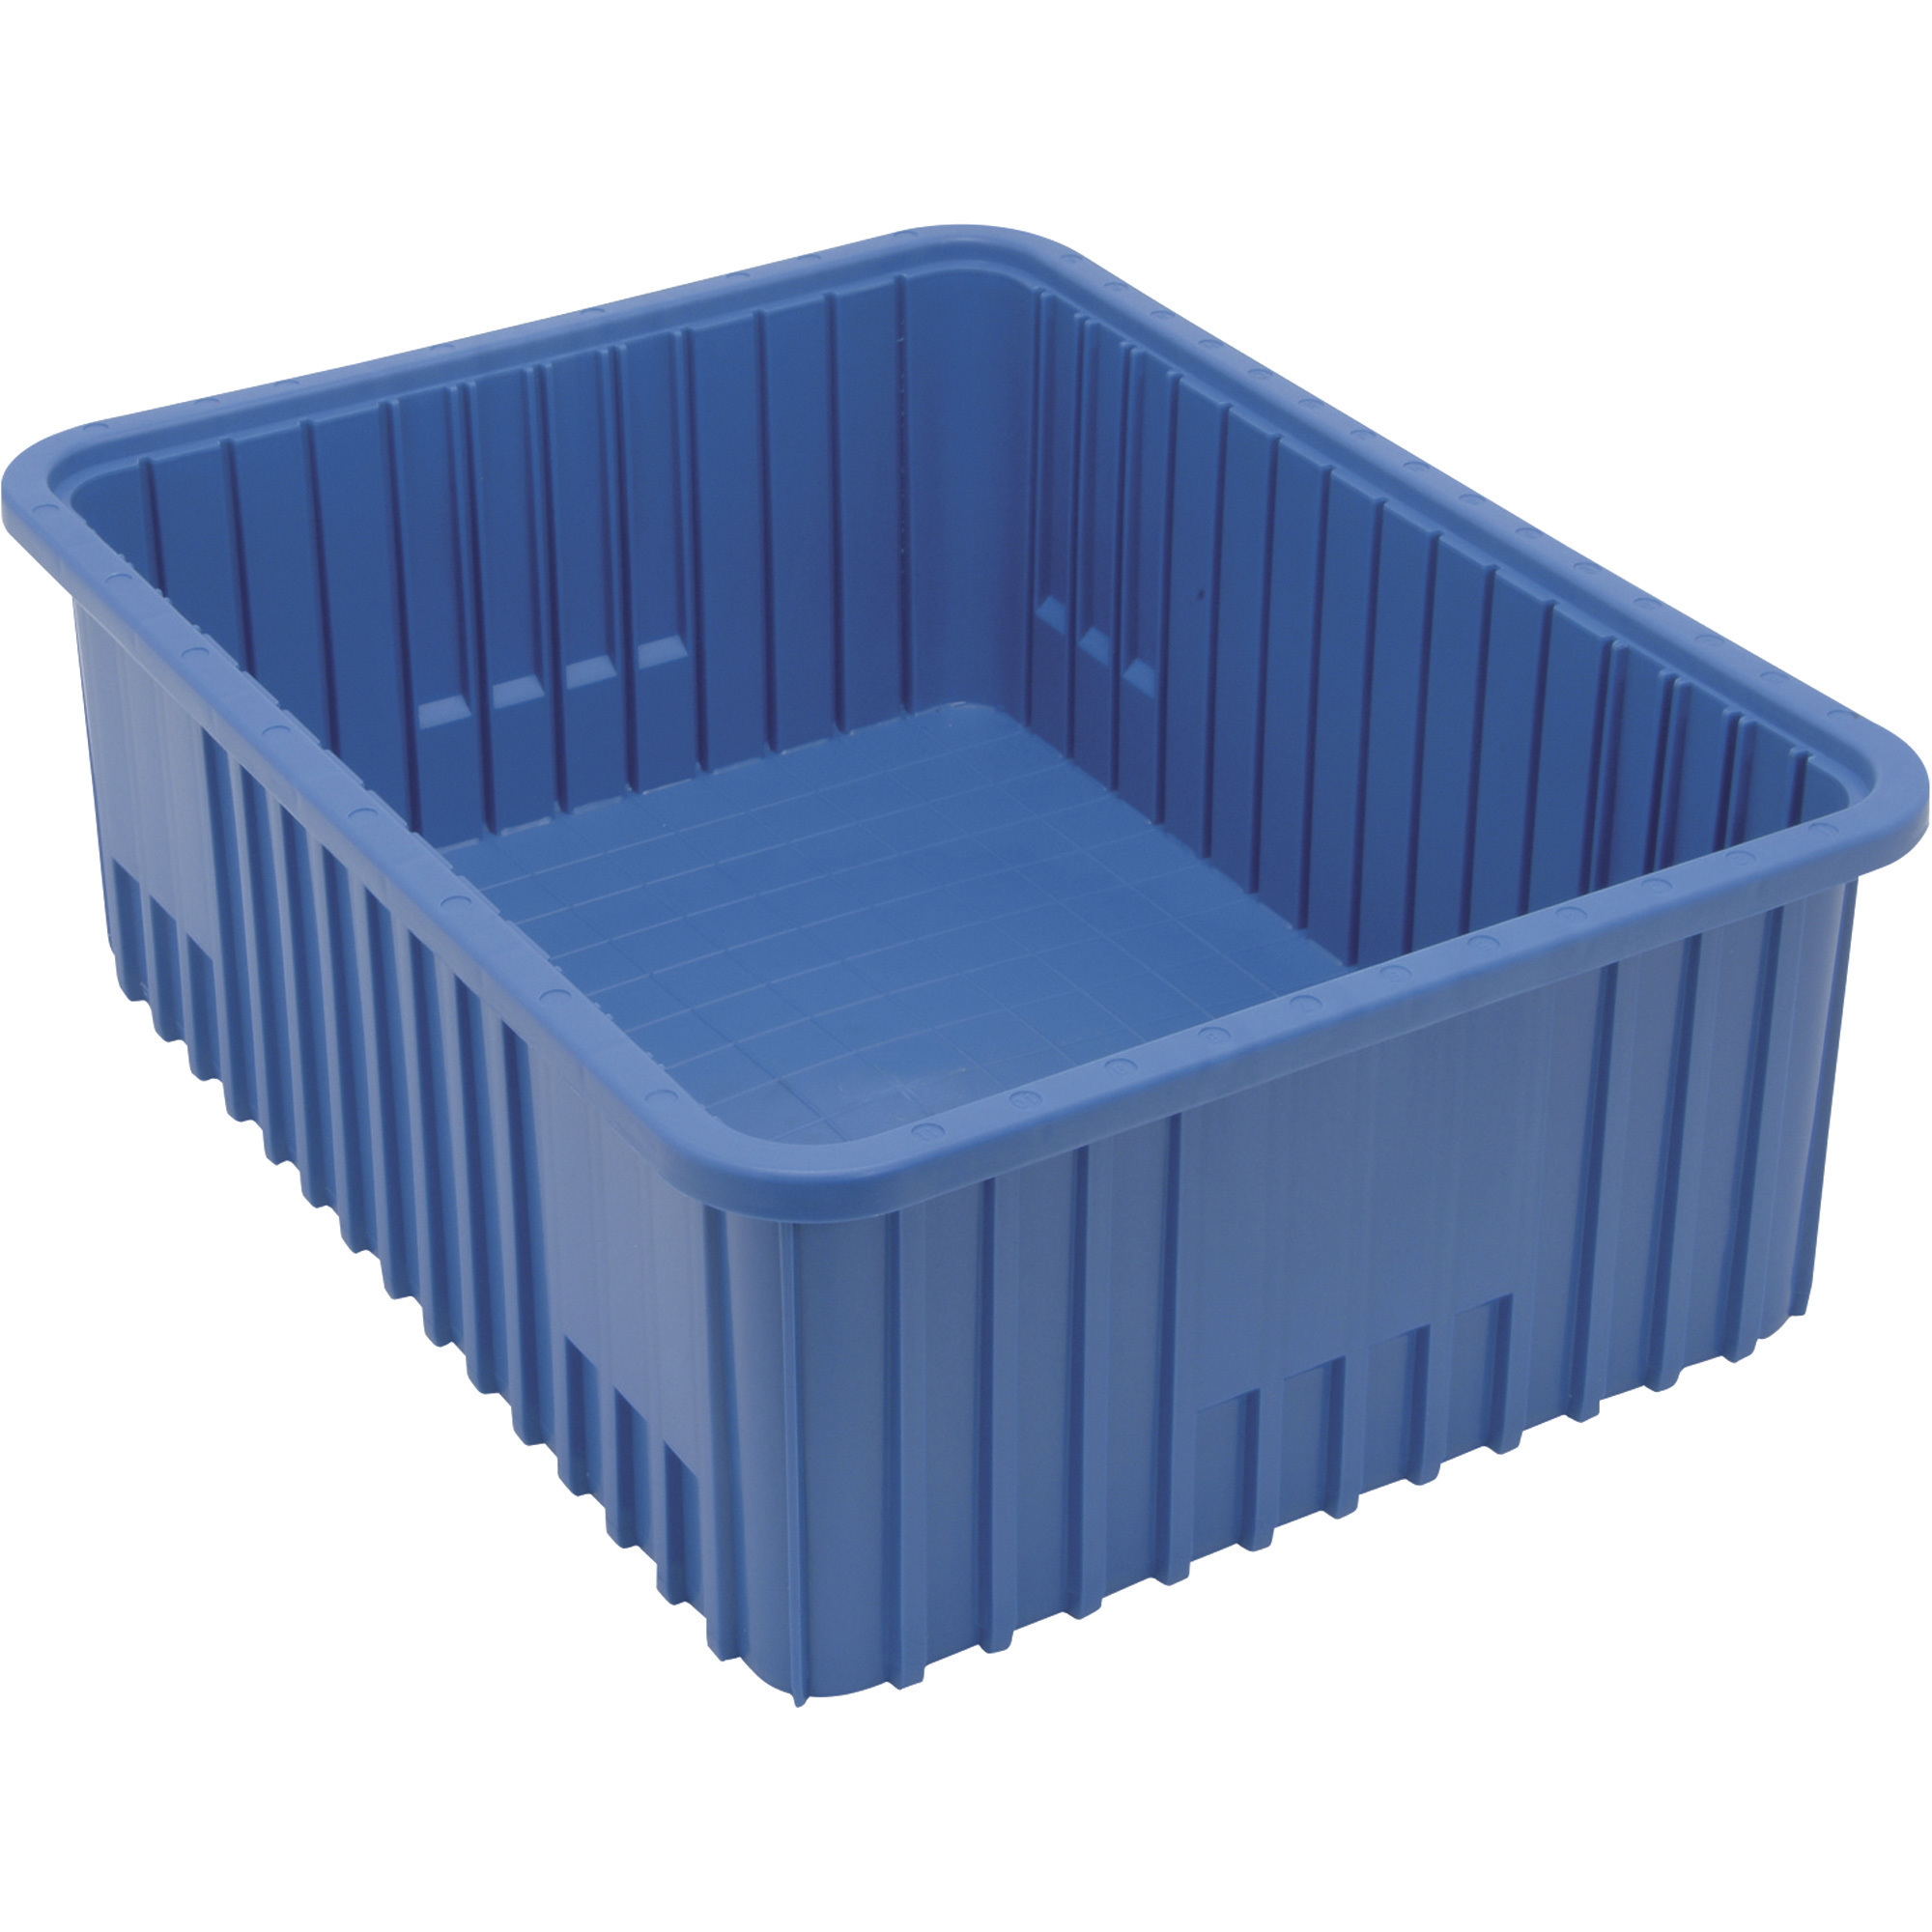 Quantum Storage Dividable Grid Container, 3-Pack, 22 1/2Inch L x 17 1/2Inch W x 8Inch H, Blue, Model DG93080BL